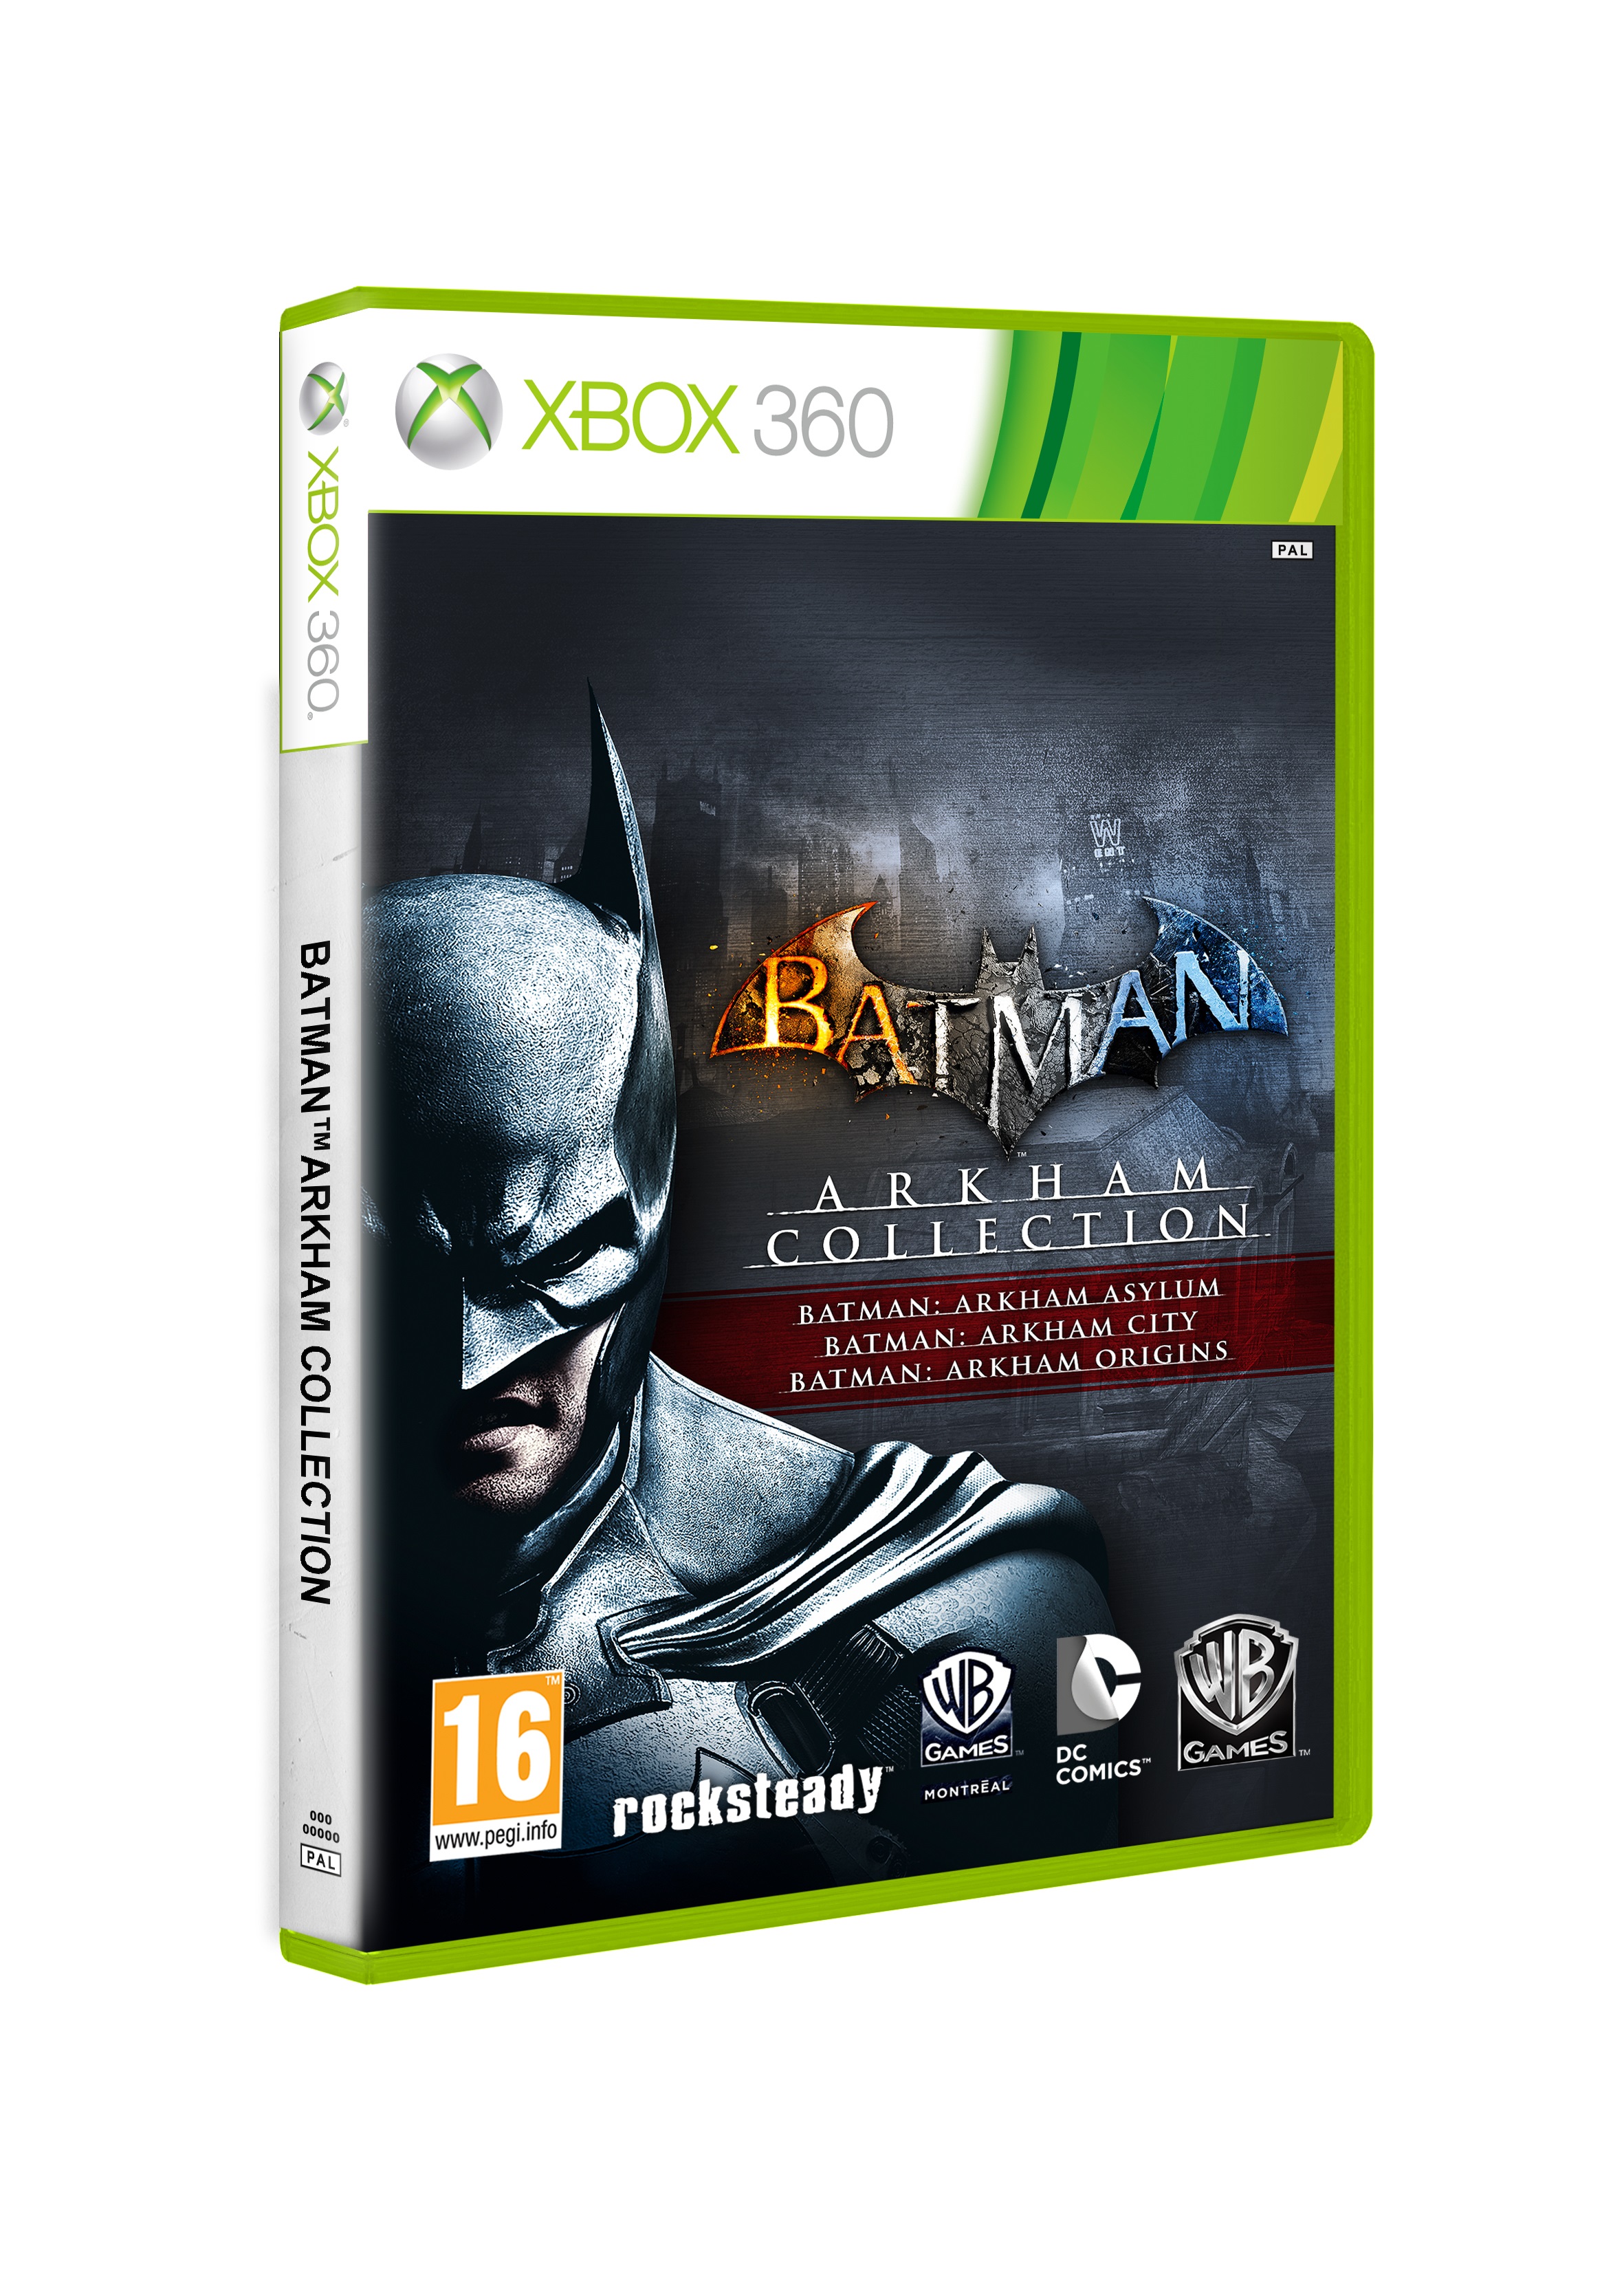 Batman trilogy switch. Бэтмен Аркхем на Xbox 360. Икс бокс 360 Batman: Arkham. Batman: Arkham Trilogy collection русская версия Xbox 360. Бэтмен Аркхем Сити иксбокс 360.